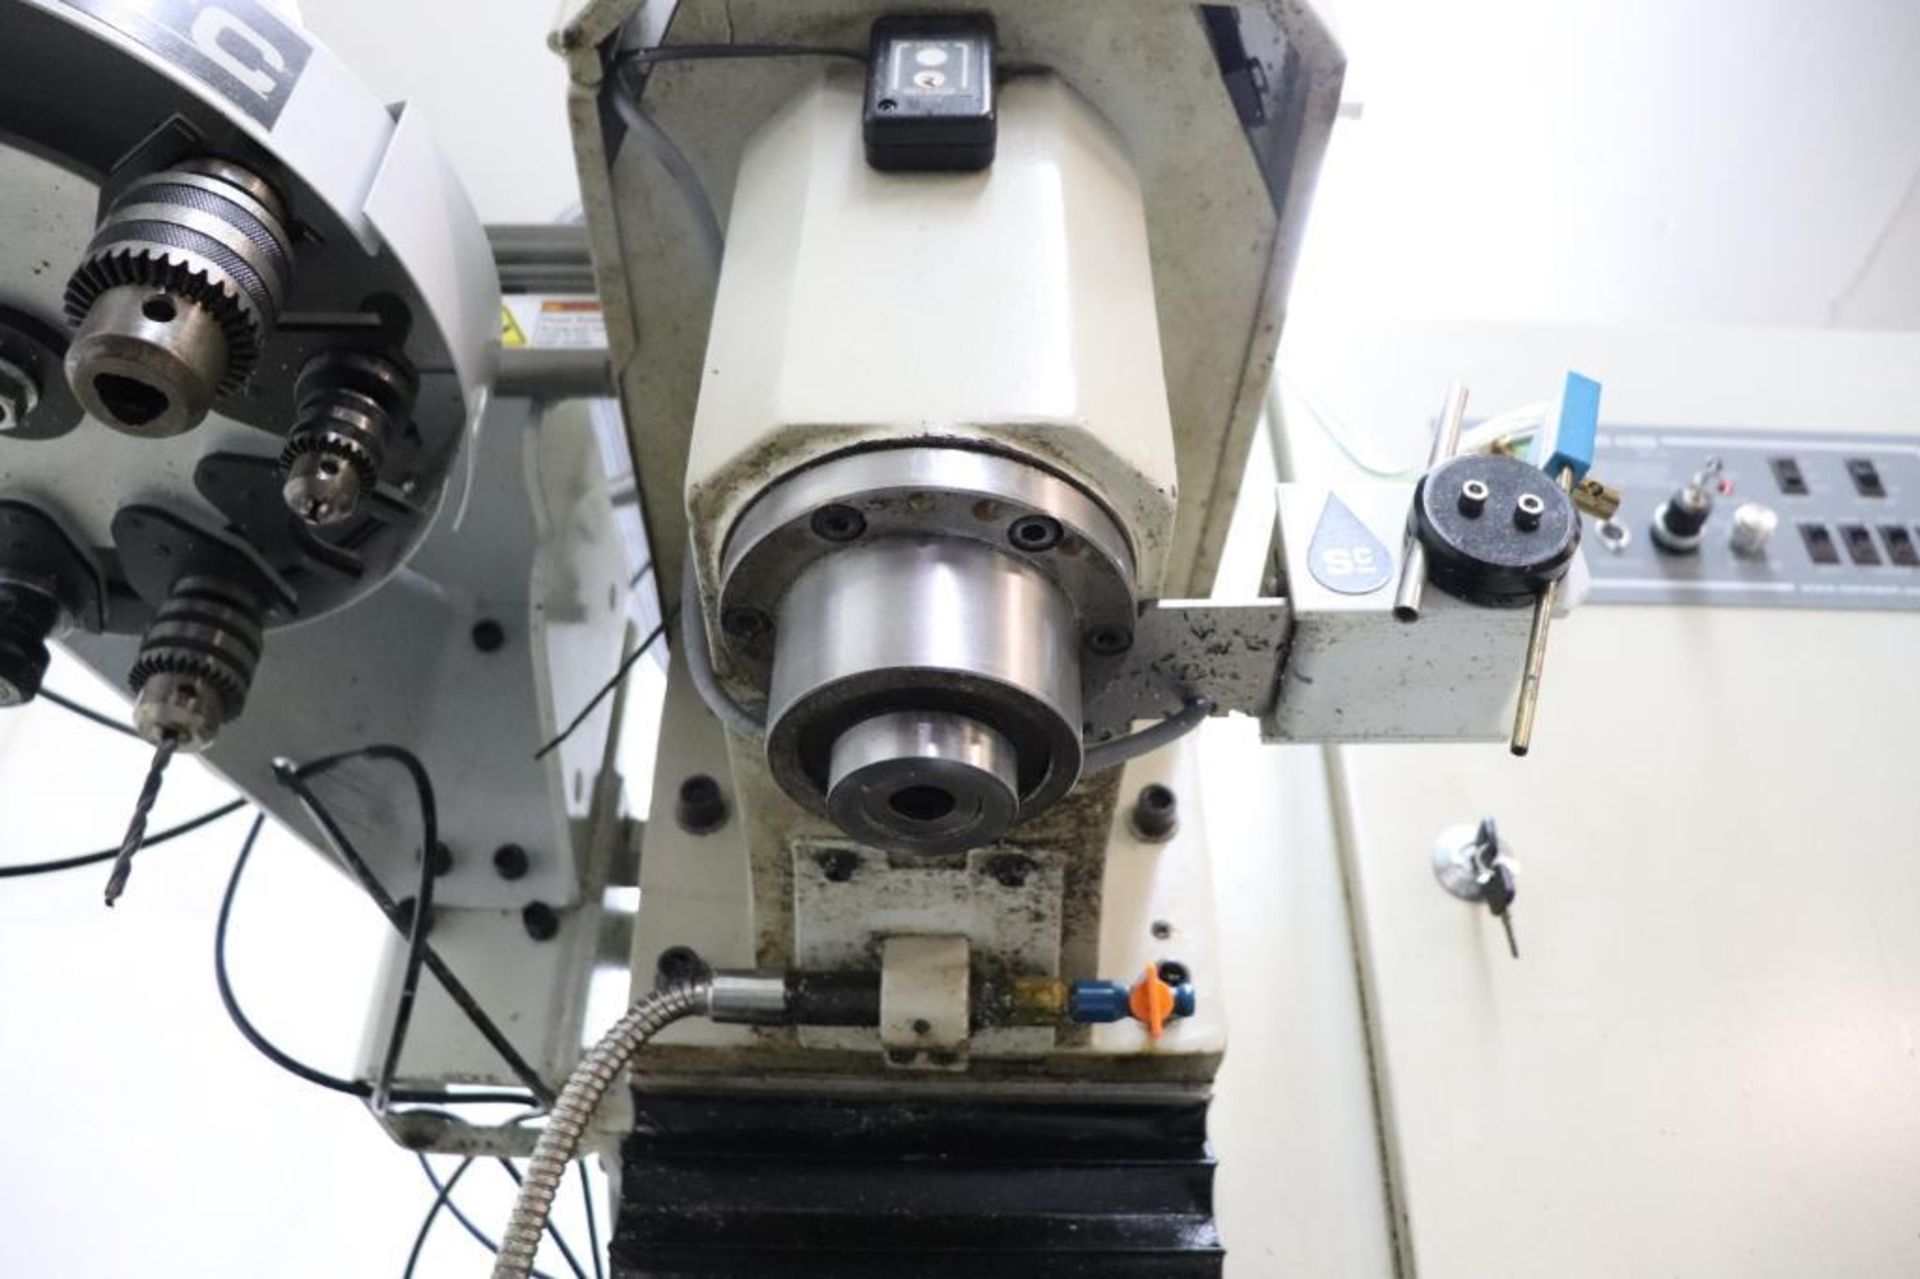 Tormach PCNC1100 CNC milling machine - Image 7 of 26